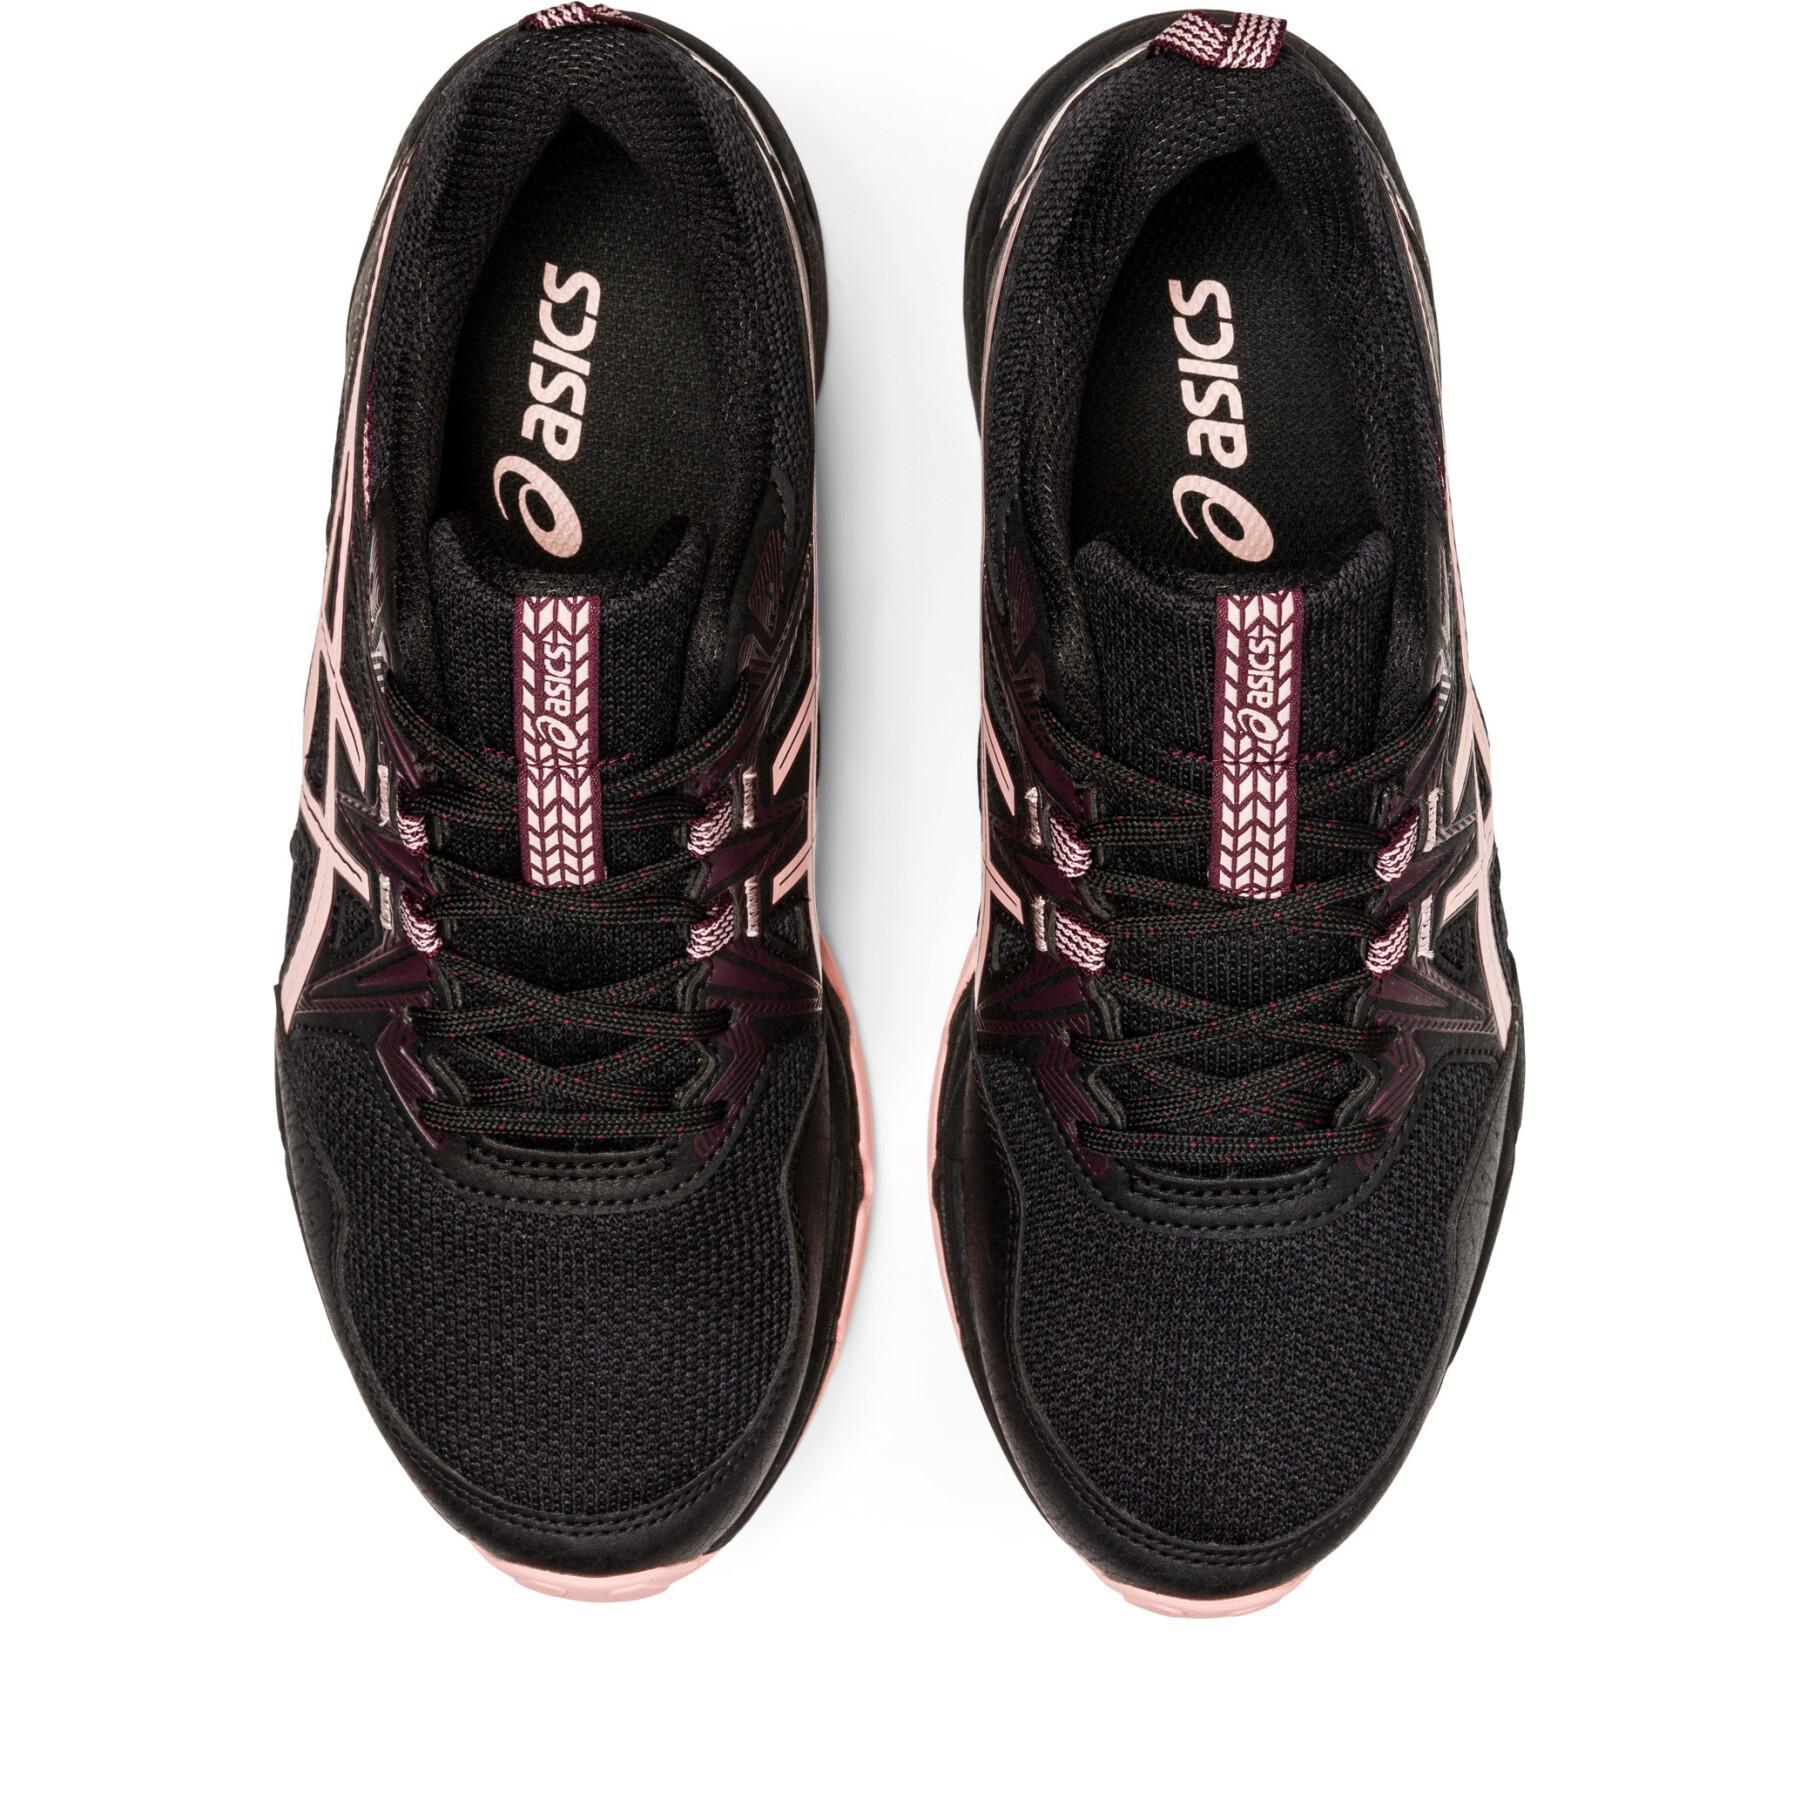 Women's running shoes Asics Gel-Venture 8